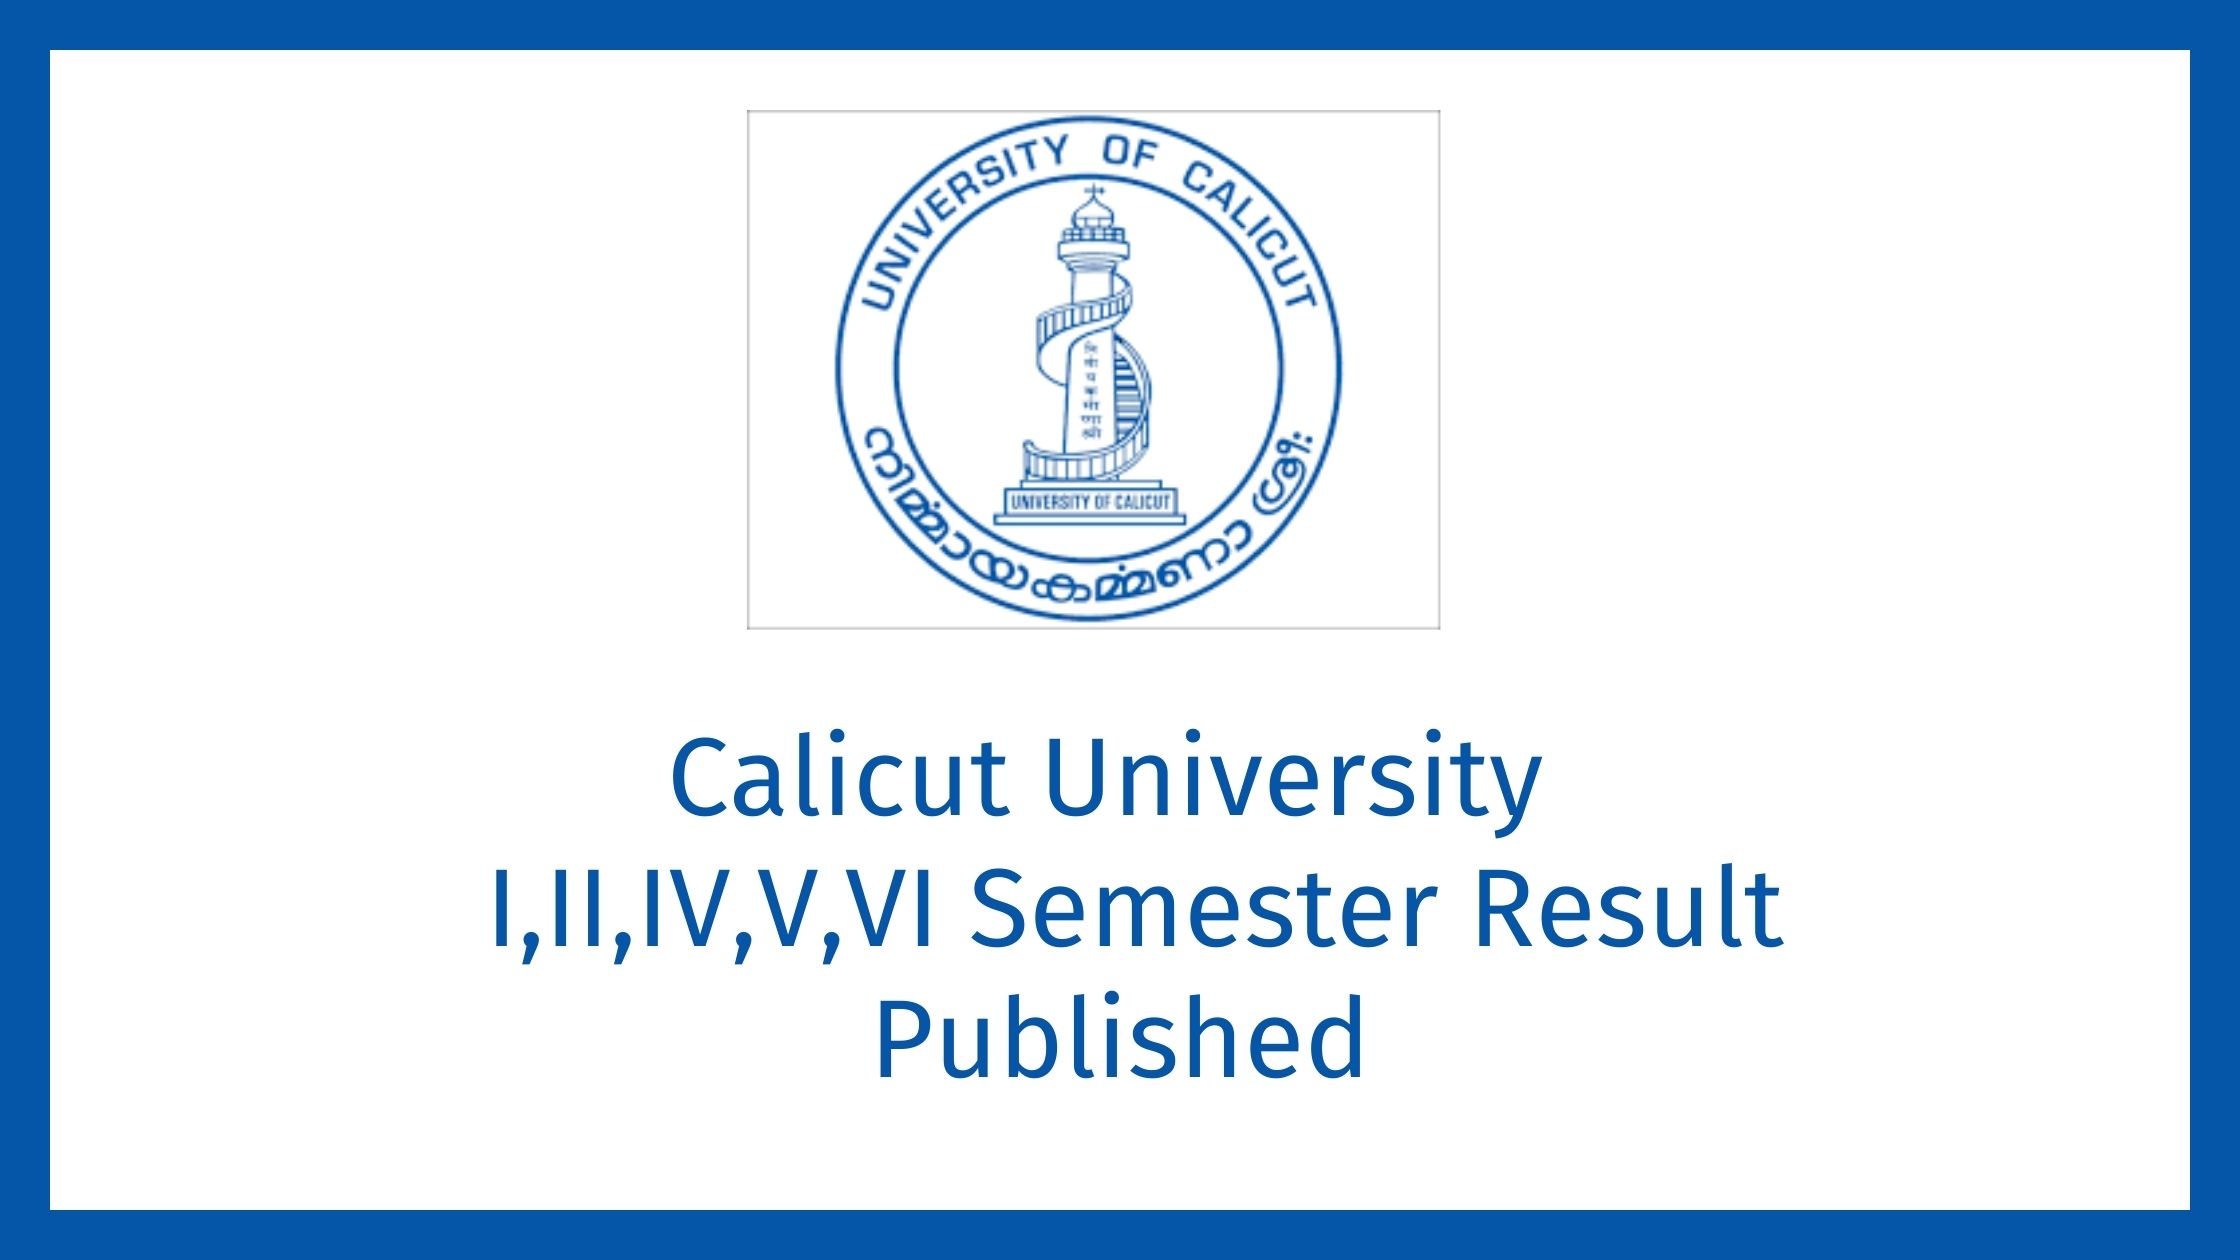 Calicut University I,II,IV,V,VI Semester Result Published